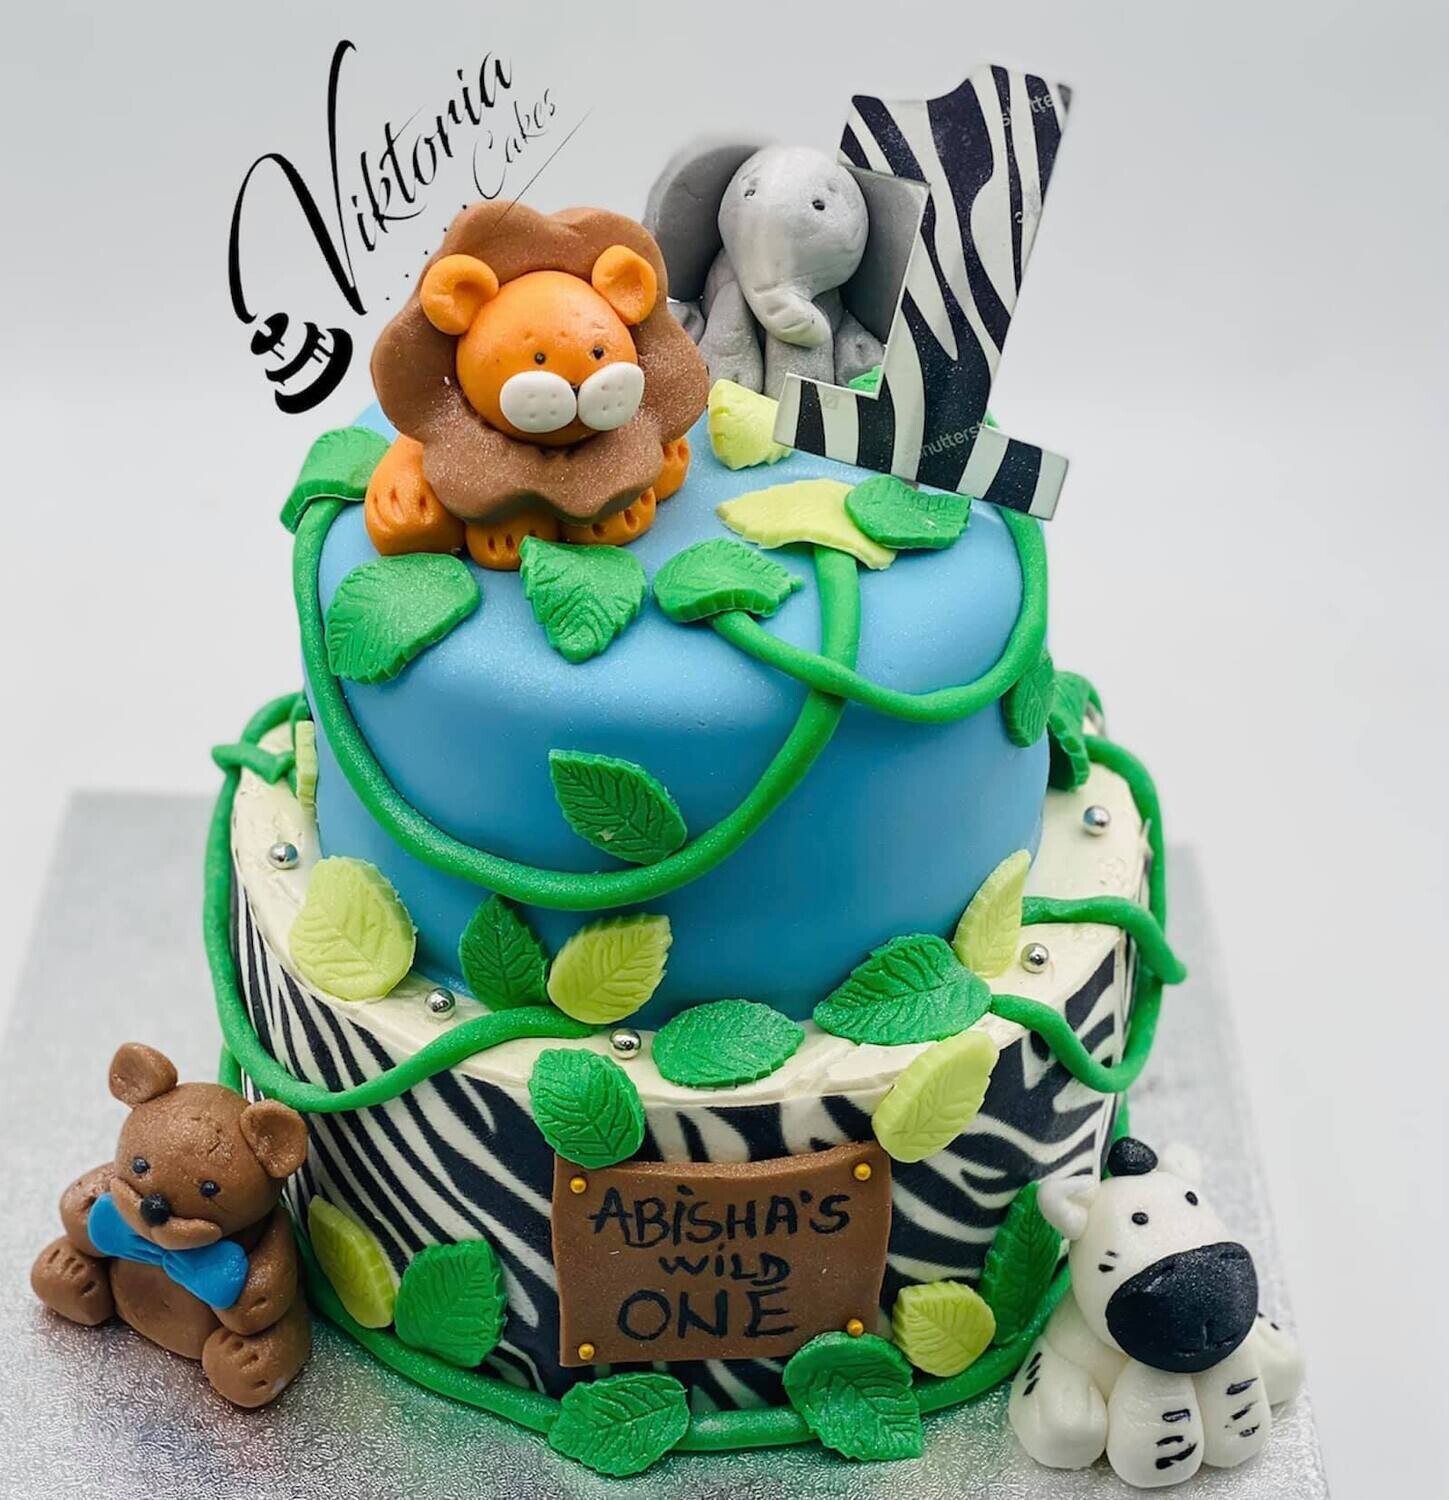 Personalised Animals Cake Toppers Set - Fondant Lion Giraffe Zebra Elephant  - Kids Birthday Cupcake Decoration Comes with an Edible Glue - 4 Pcs :  Amazon.co.uk: Grocery